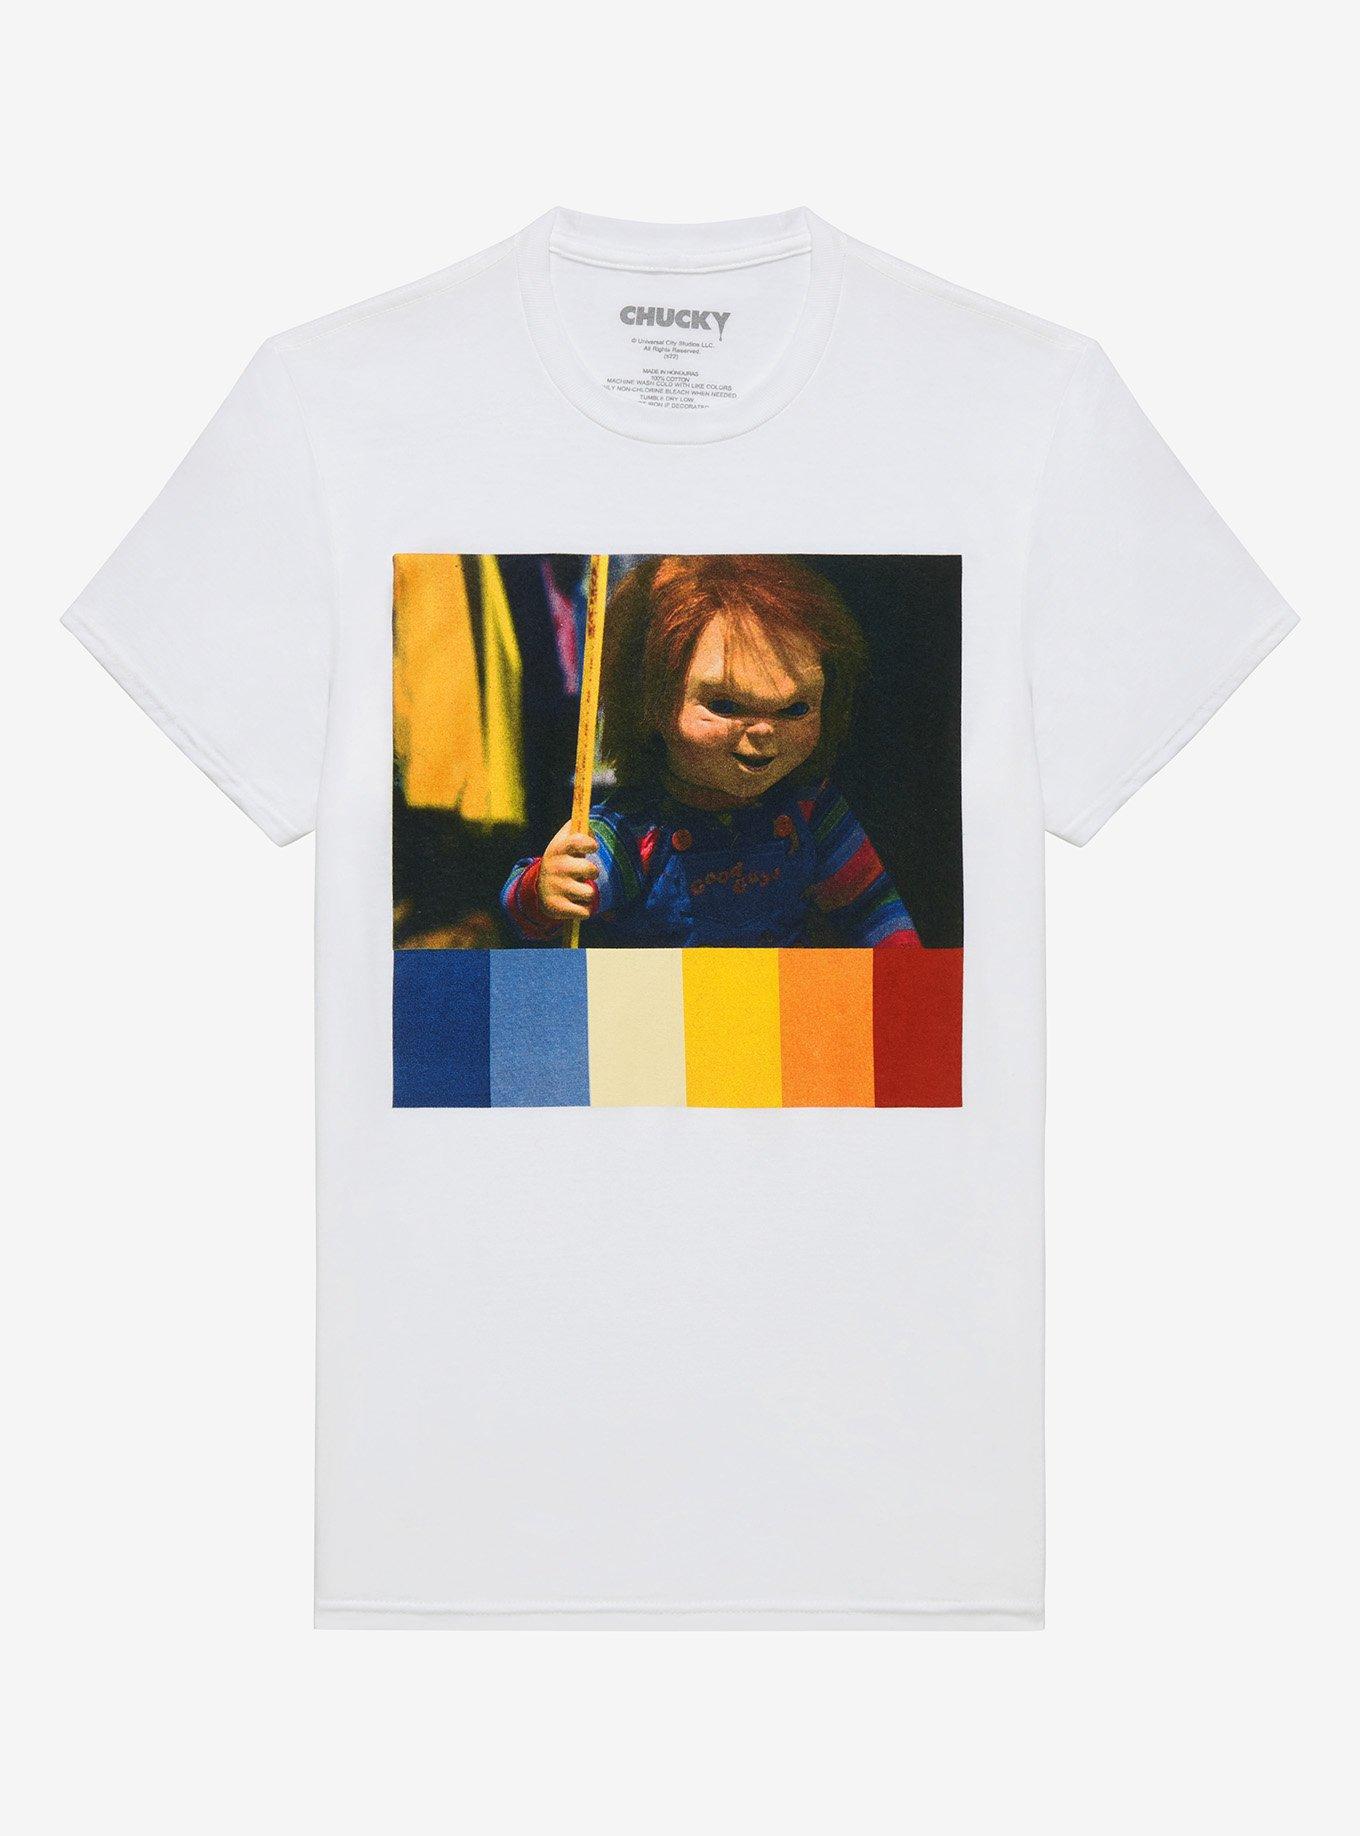 Child's Play Chucky Screen Shot Color Bar T-Shirt, MULTI, hi-res